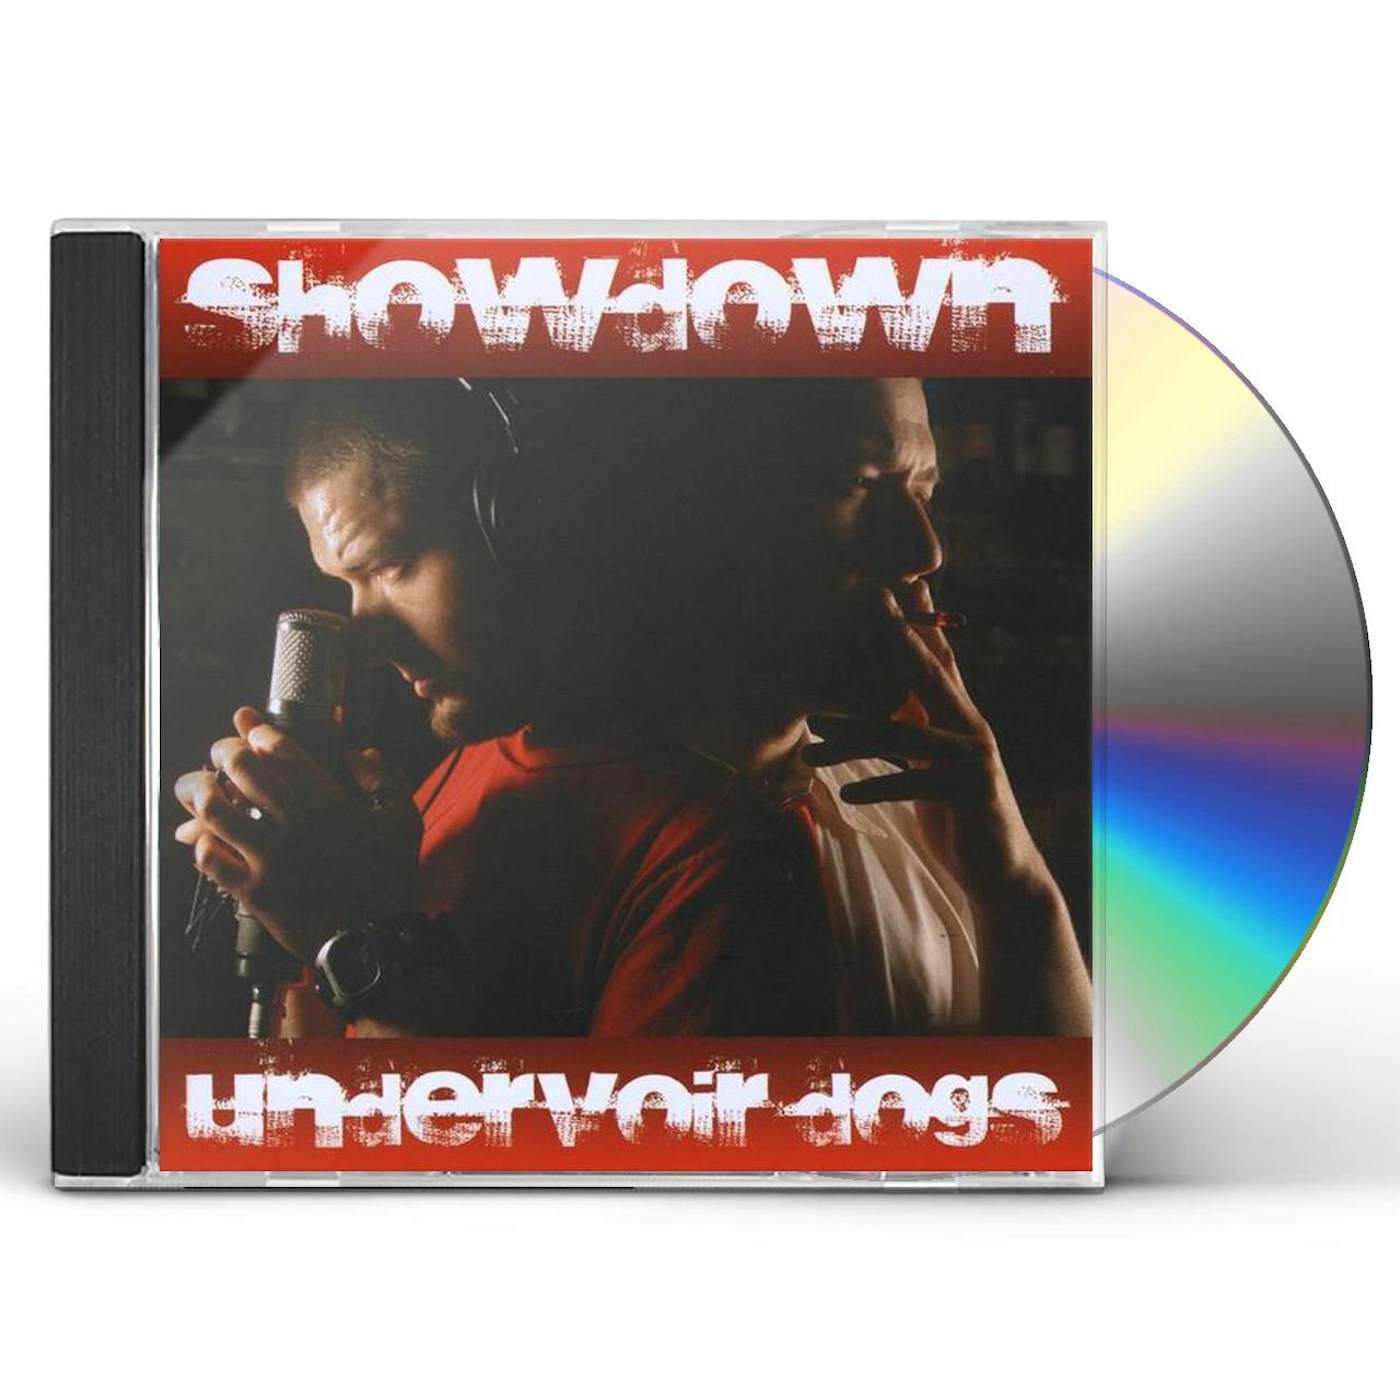 The Showdown UNDERVOIR DOGS CD